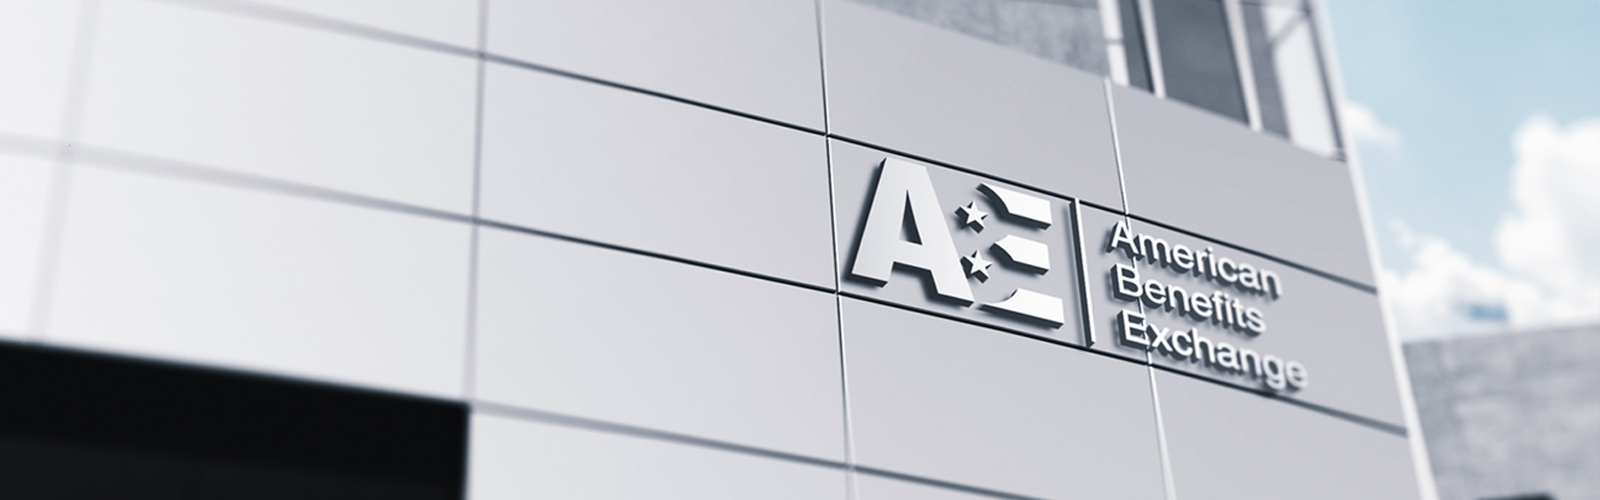 American Benefits Exchange Logo Building ABX